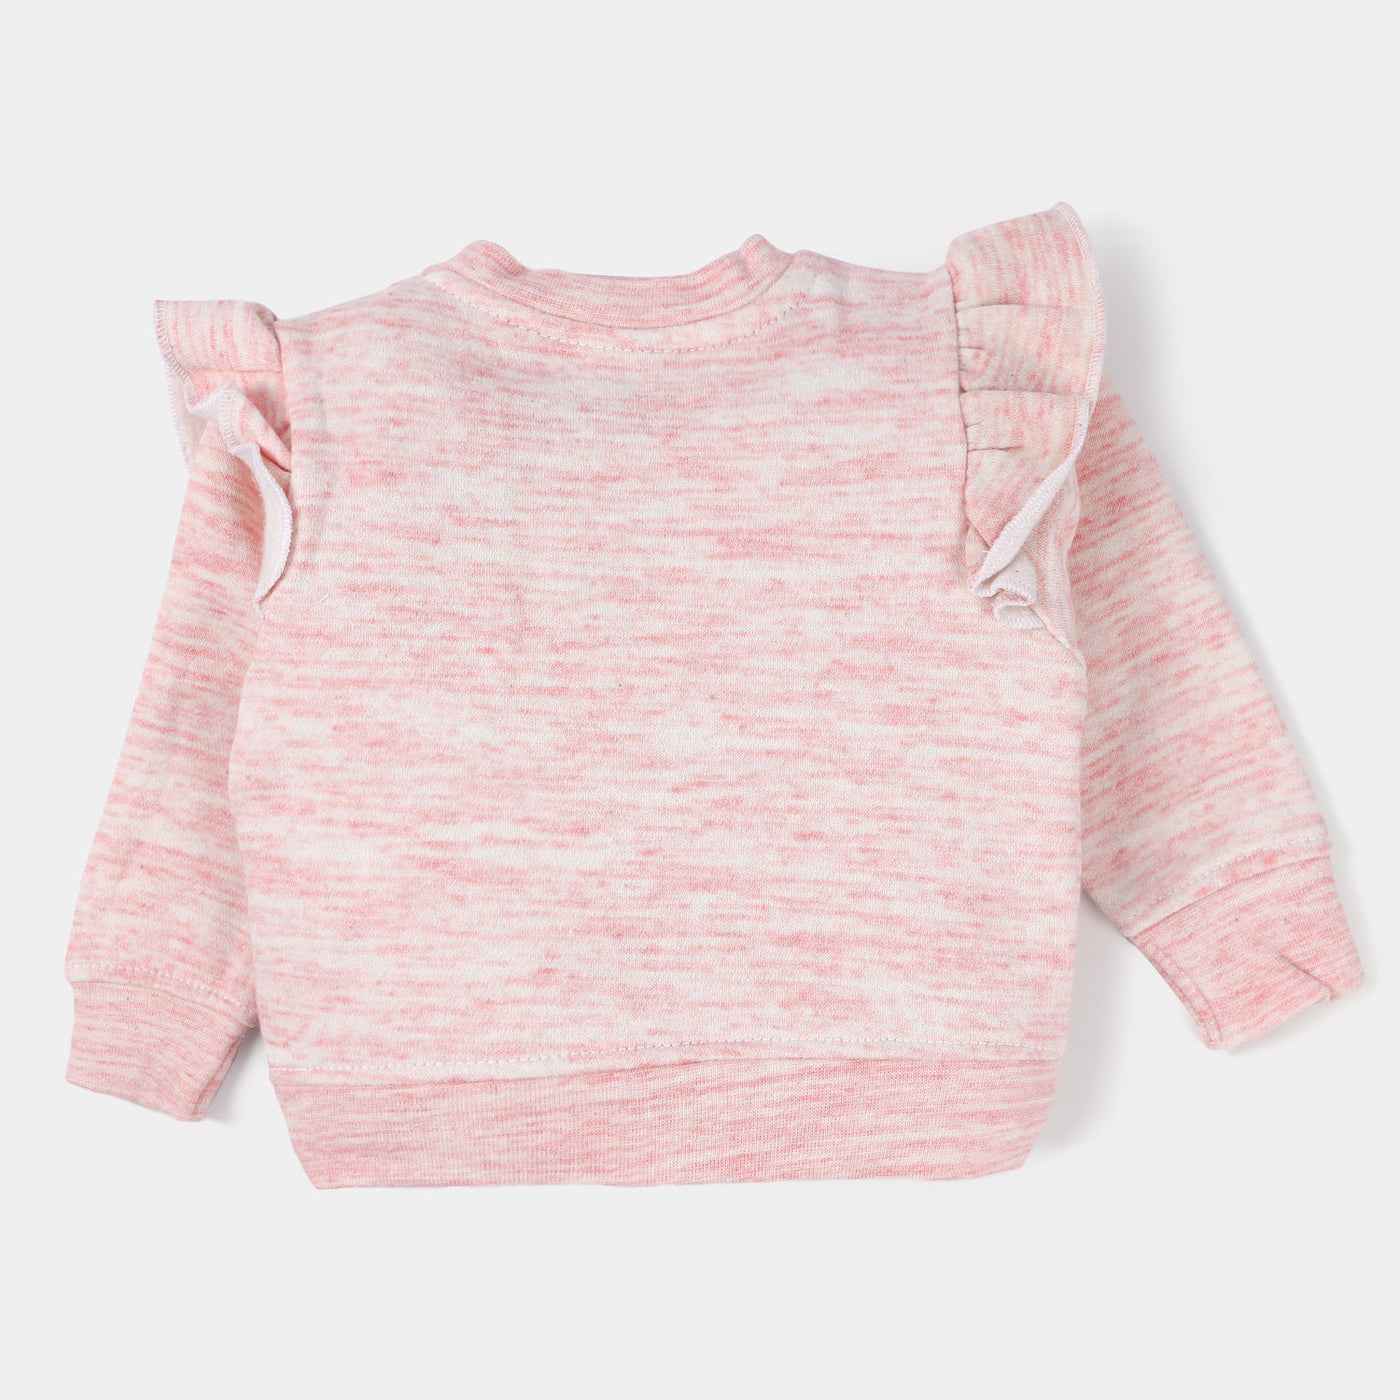 Infants Girls Fleece Sweatshirt Ice Cream-Pink Melan